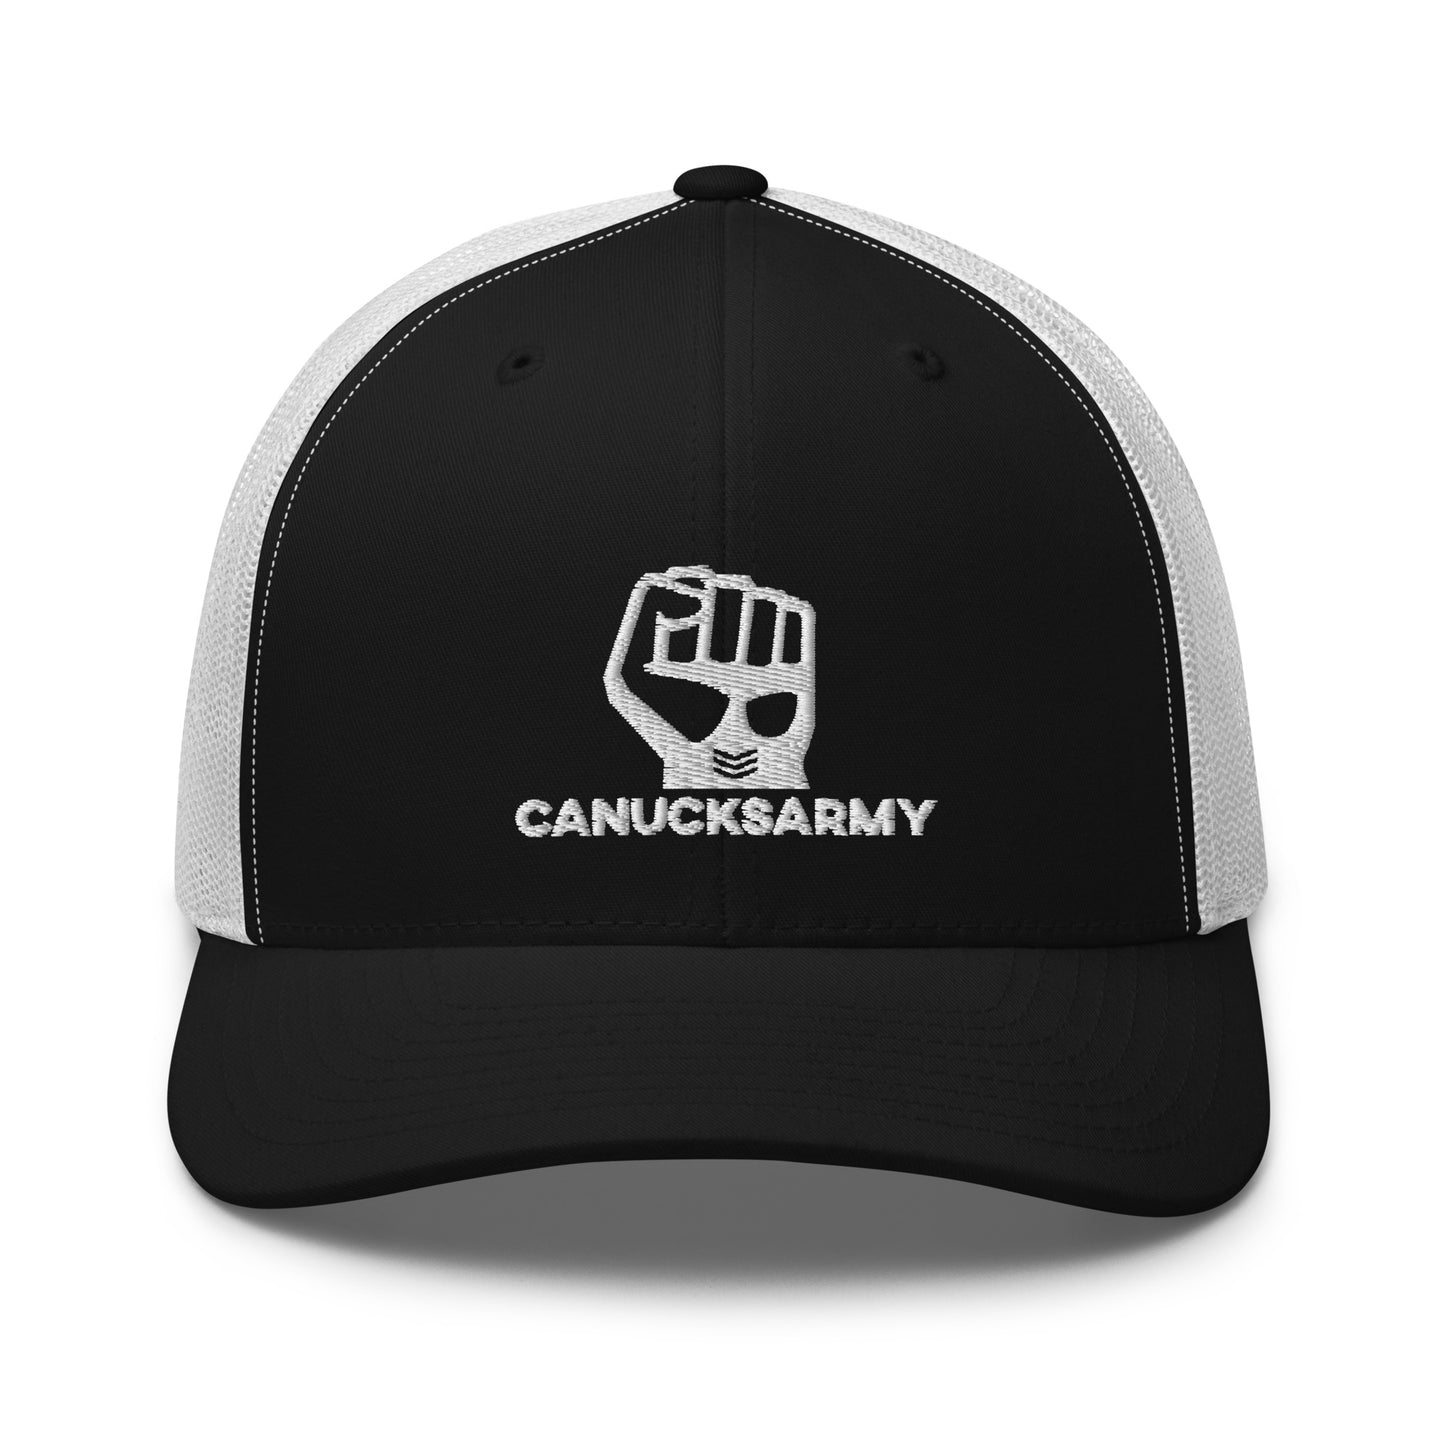 THE CLASSICS - Canucksarmy Black Trucker Hat